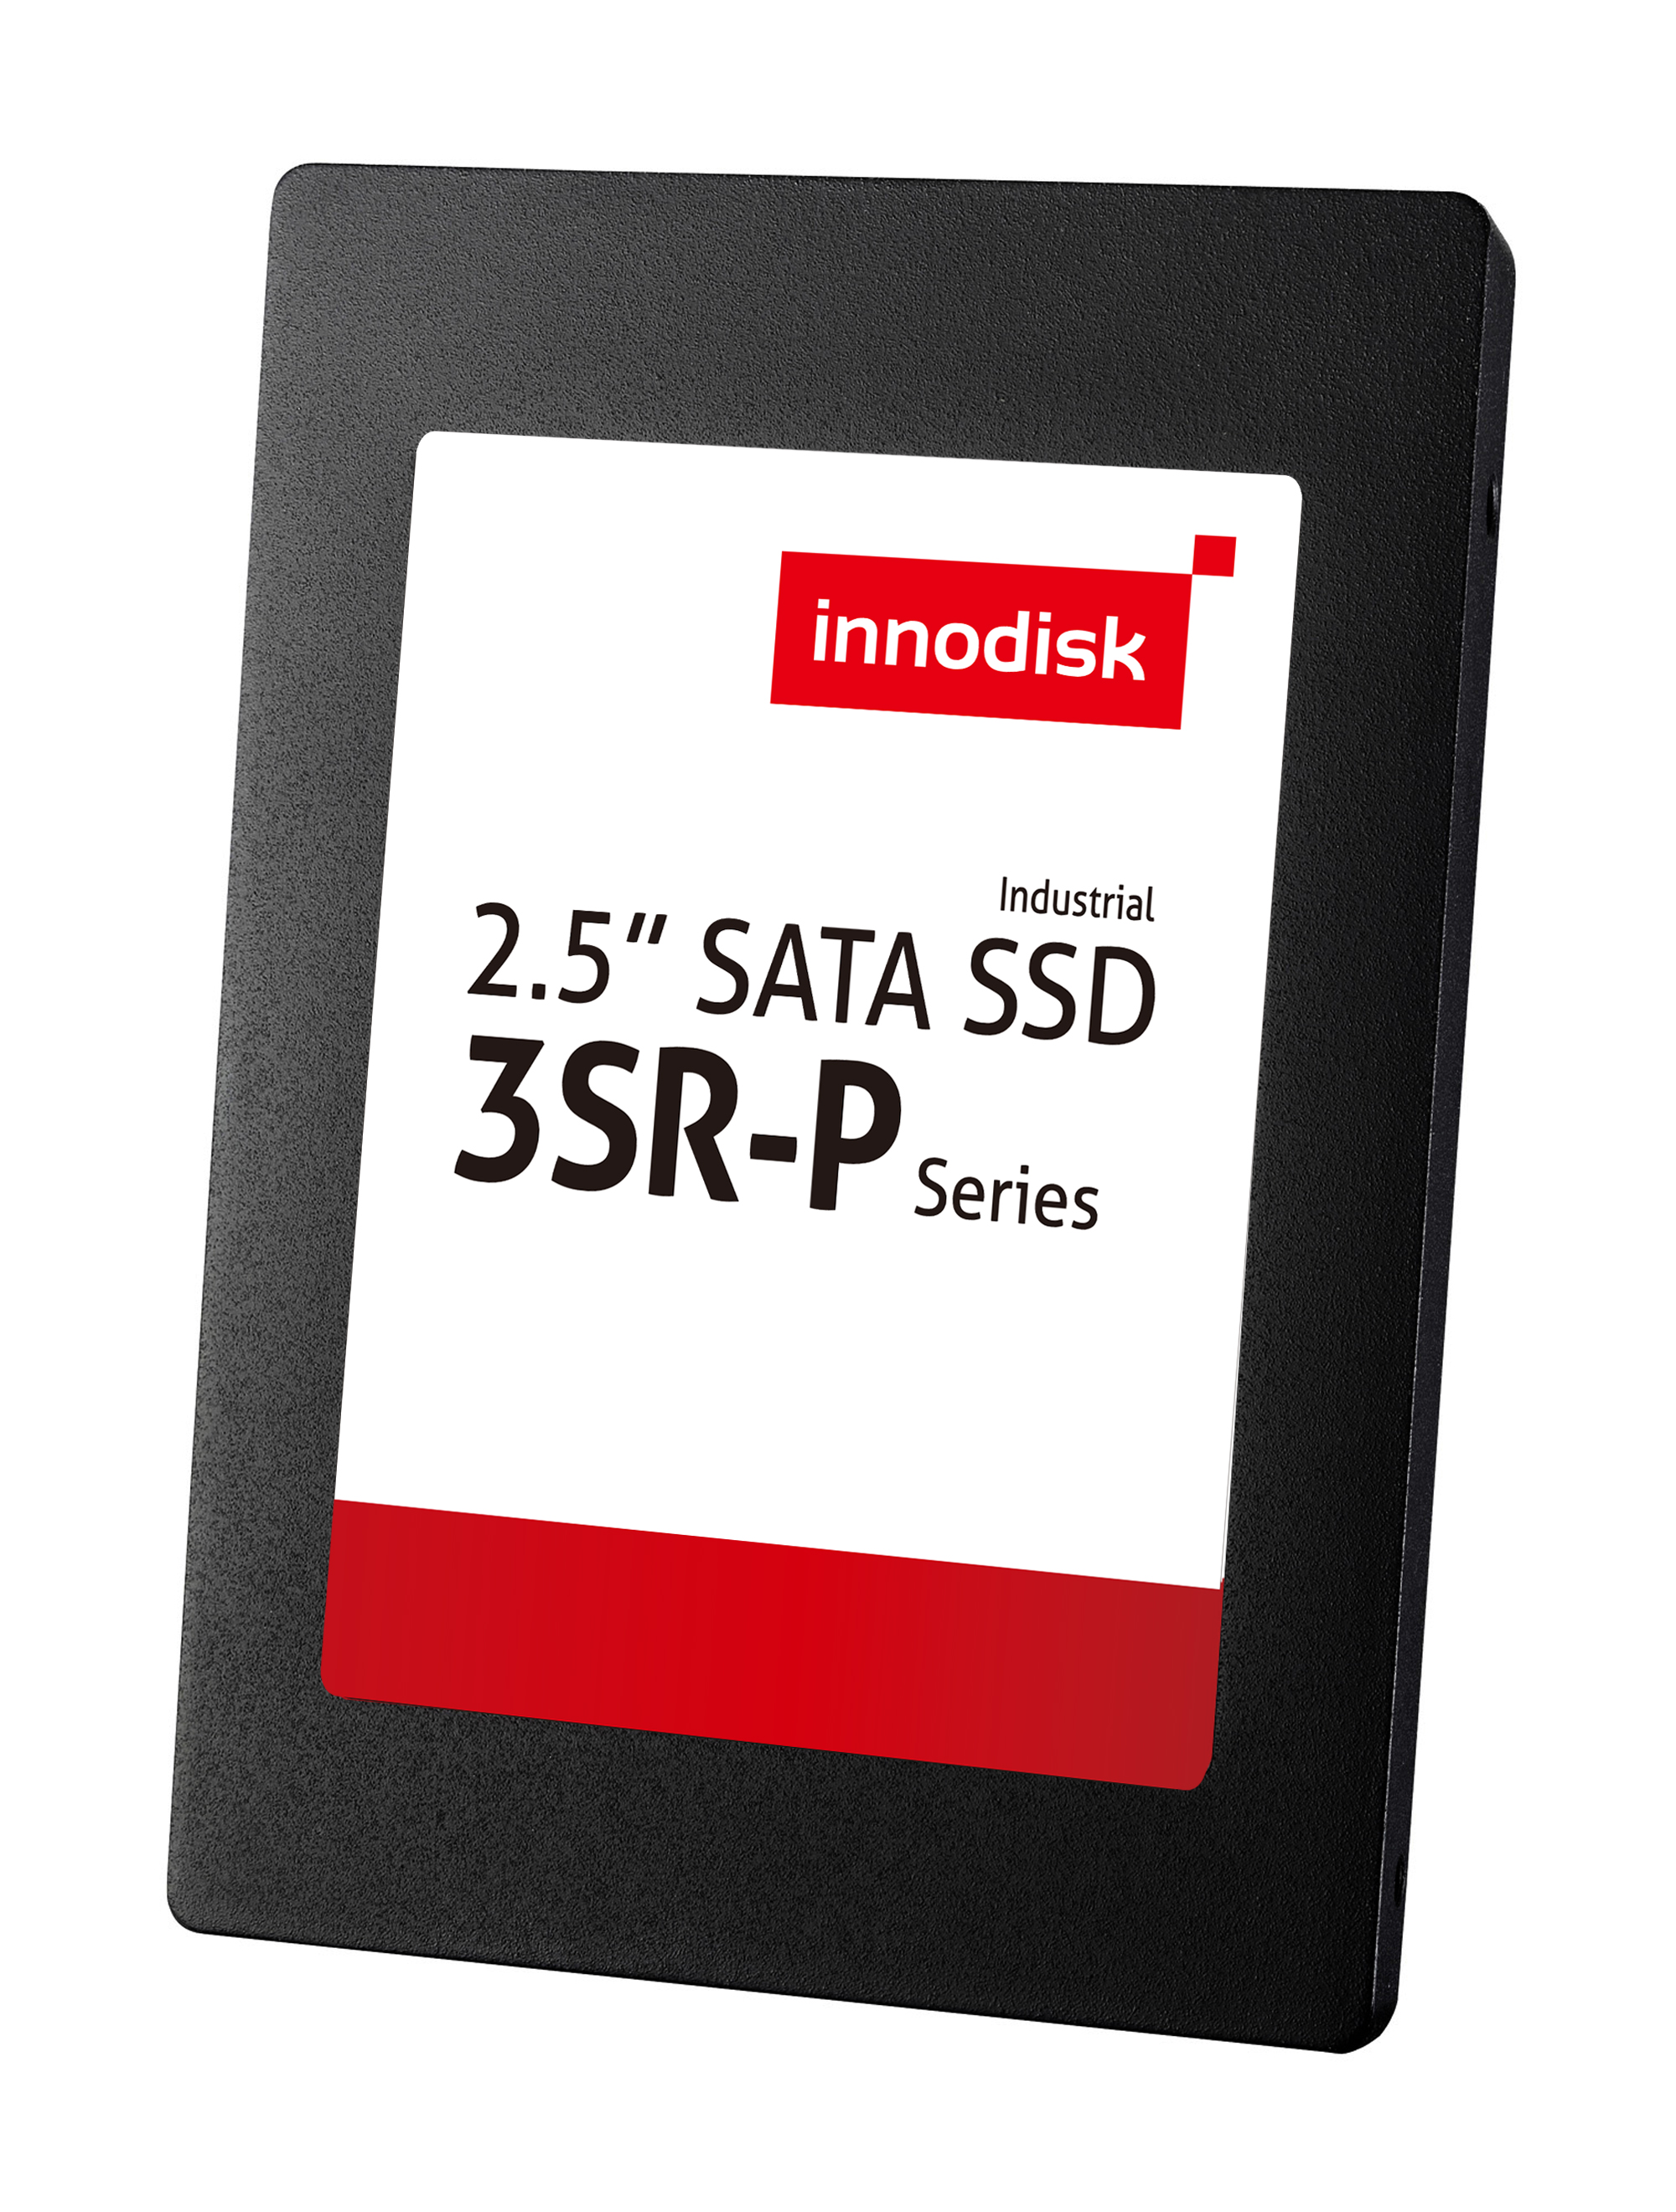 2.5" SATA SSD, InnoRobust, 3SR-P, SLC